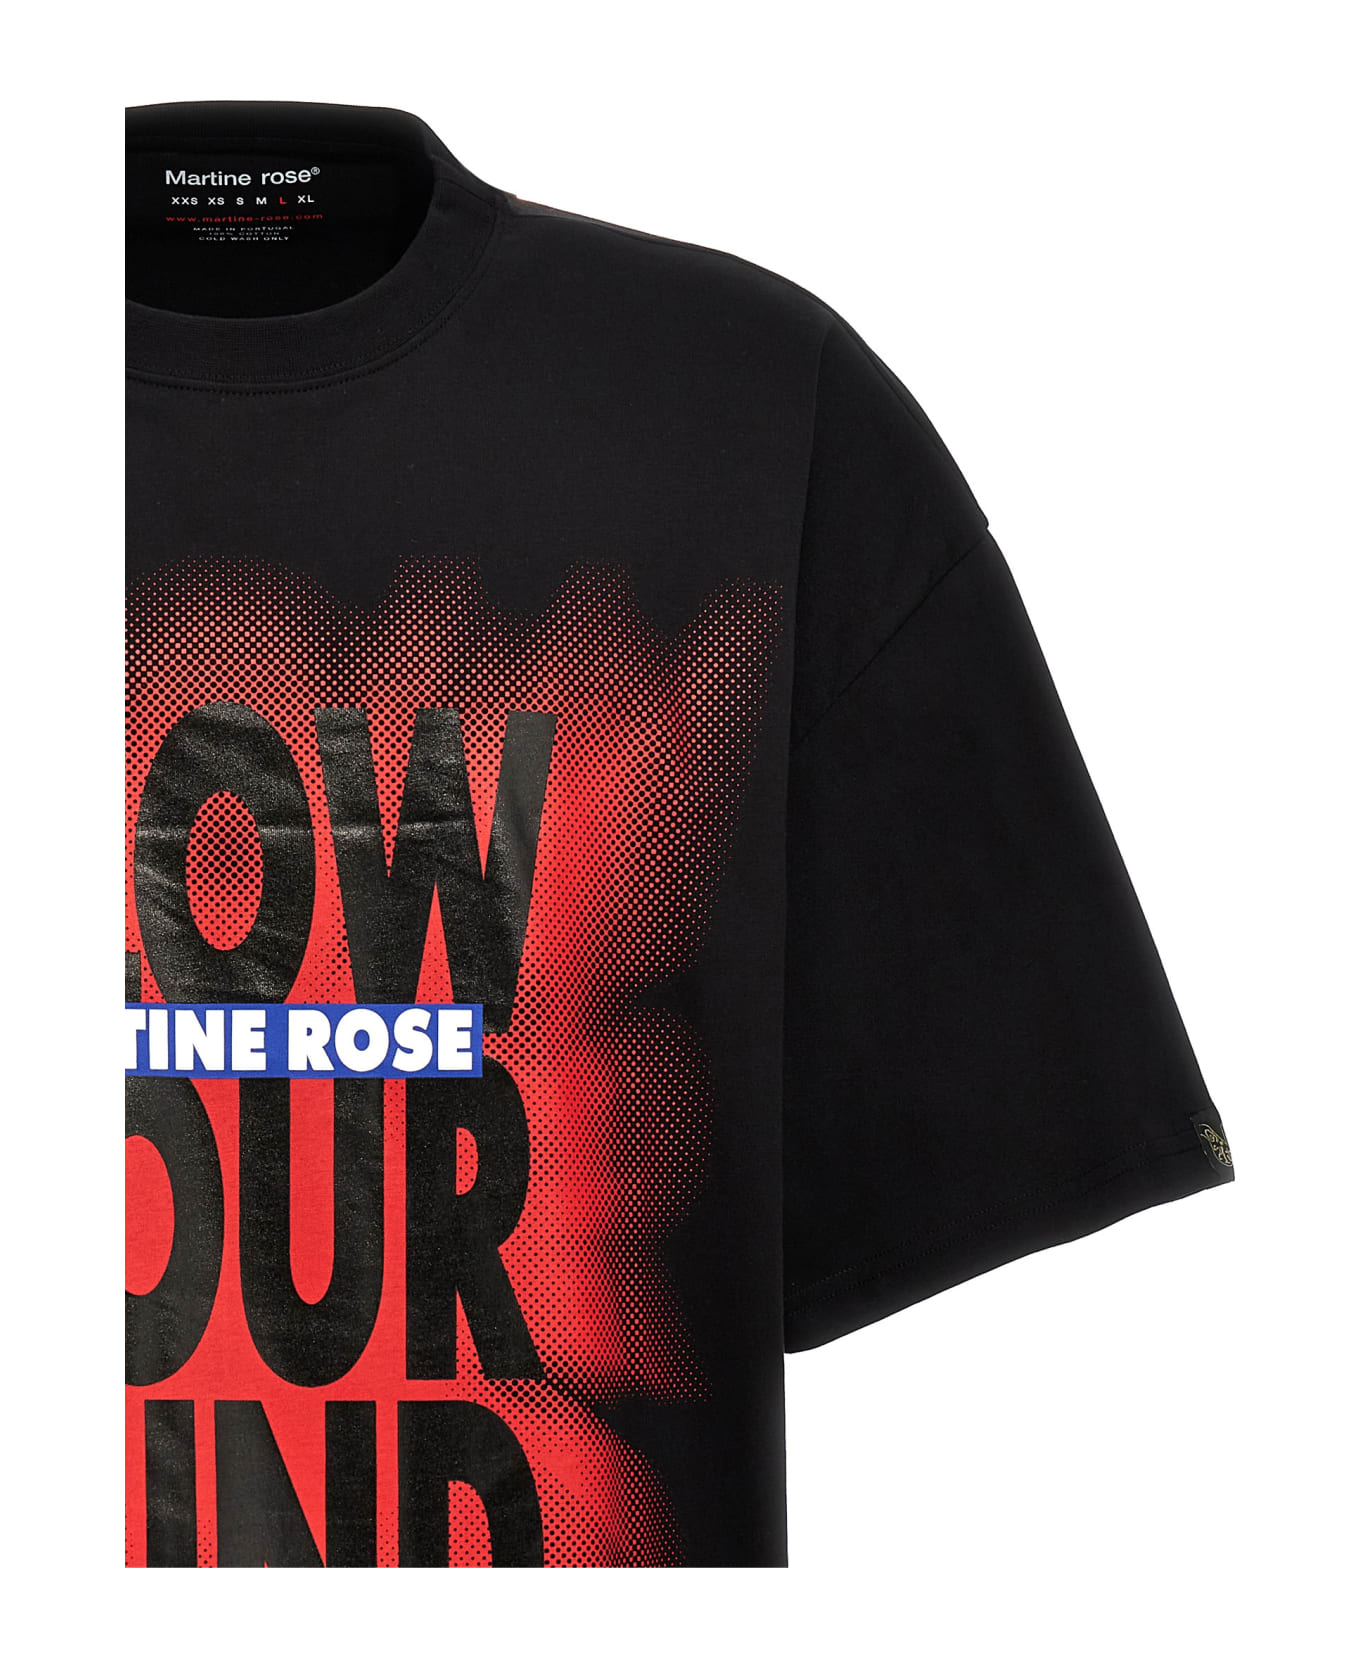 Martine Rose 'blow Your Mind' T-shirt - BLACK シャツ